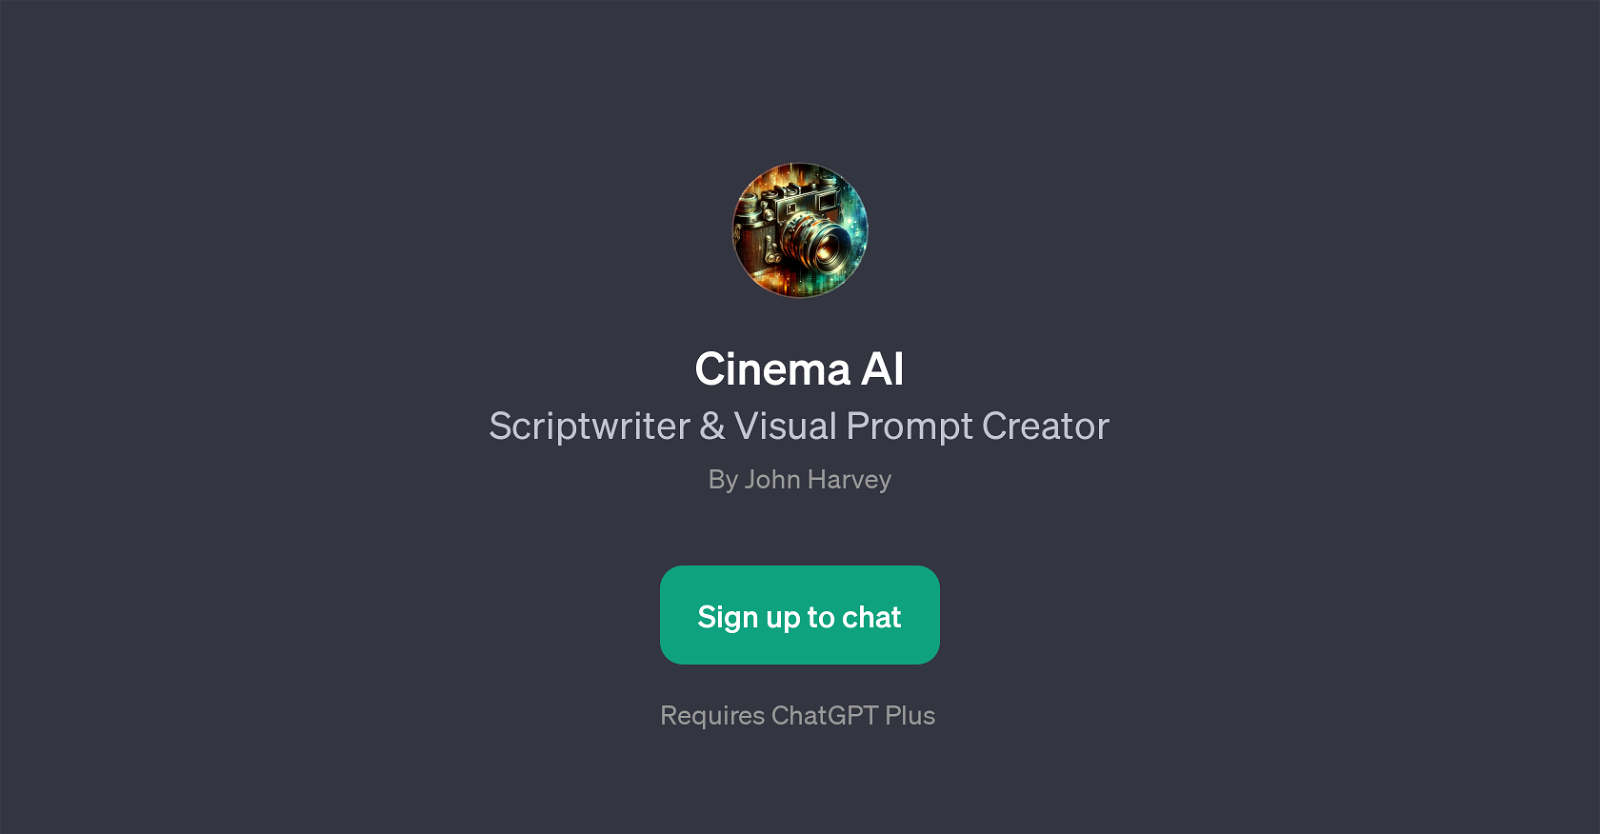 Cinema AI website